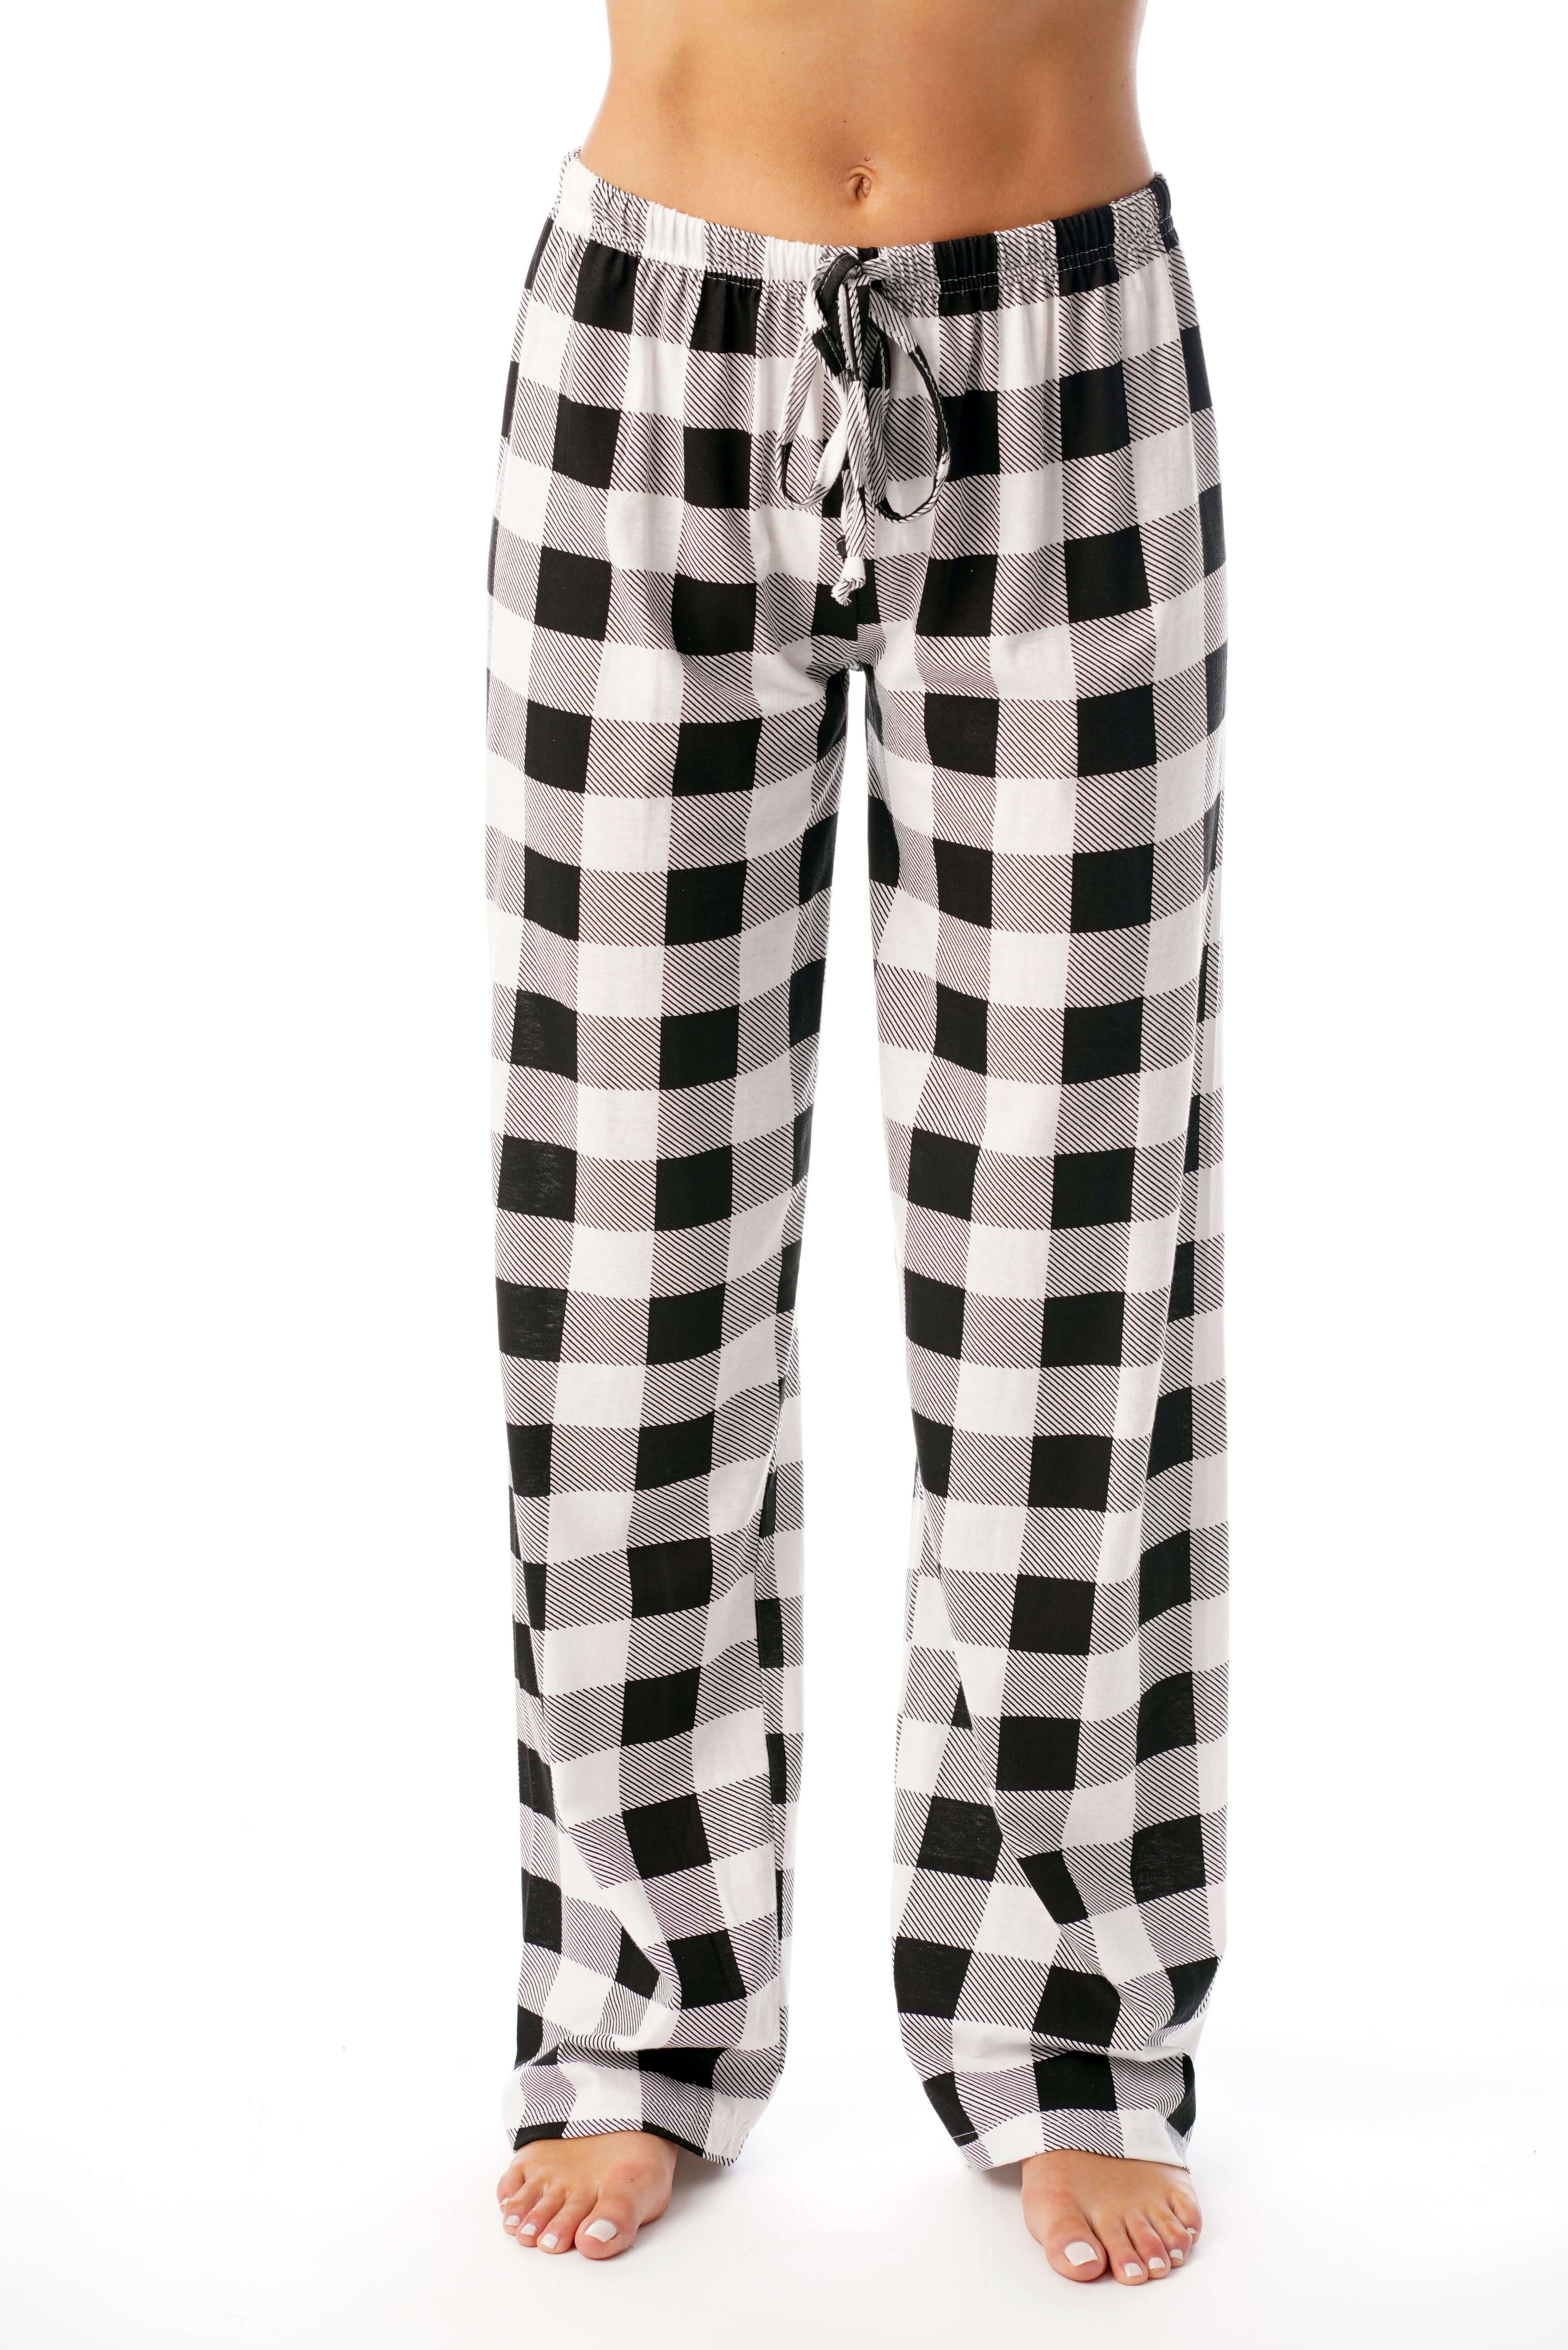 Linen Pajama Pants / Linen Loose Pants / Woman's Linen Pants / Wood Rose  Linen Pants / Soft Linen Trousers /woman Linen Pajama Pants - Etsy